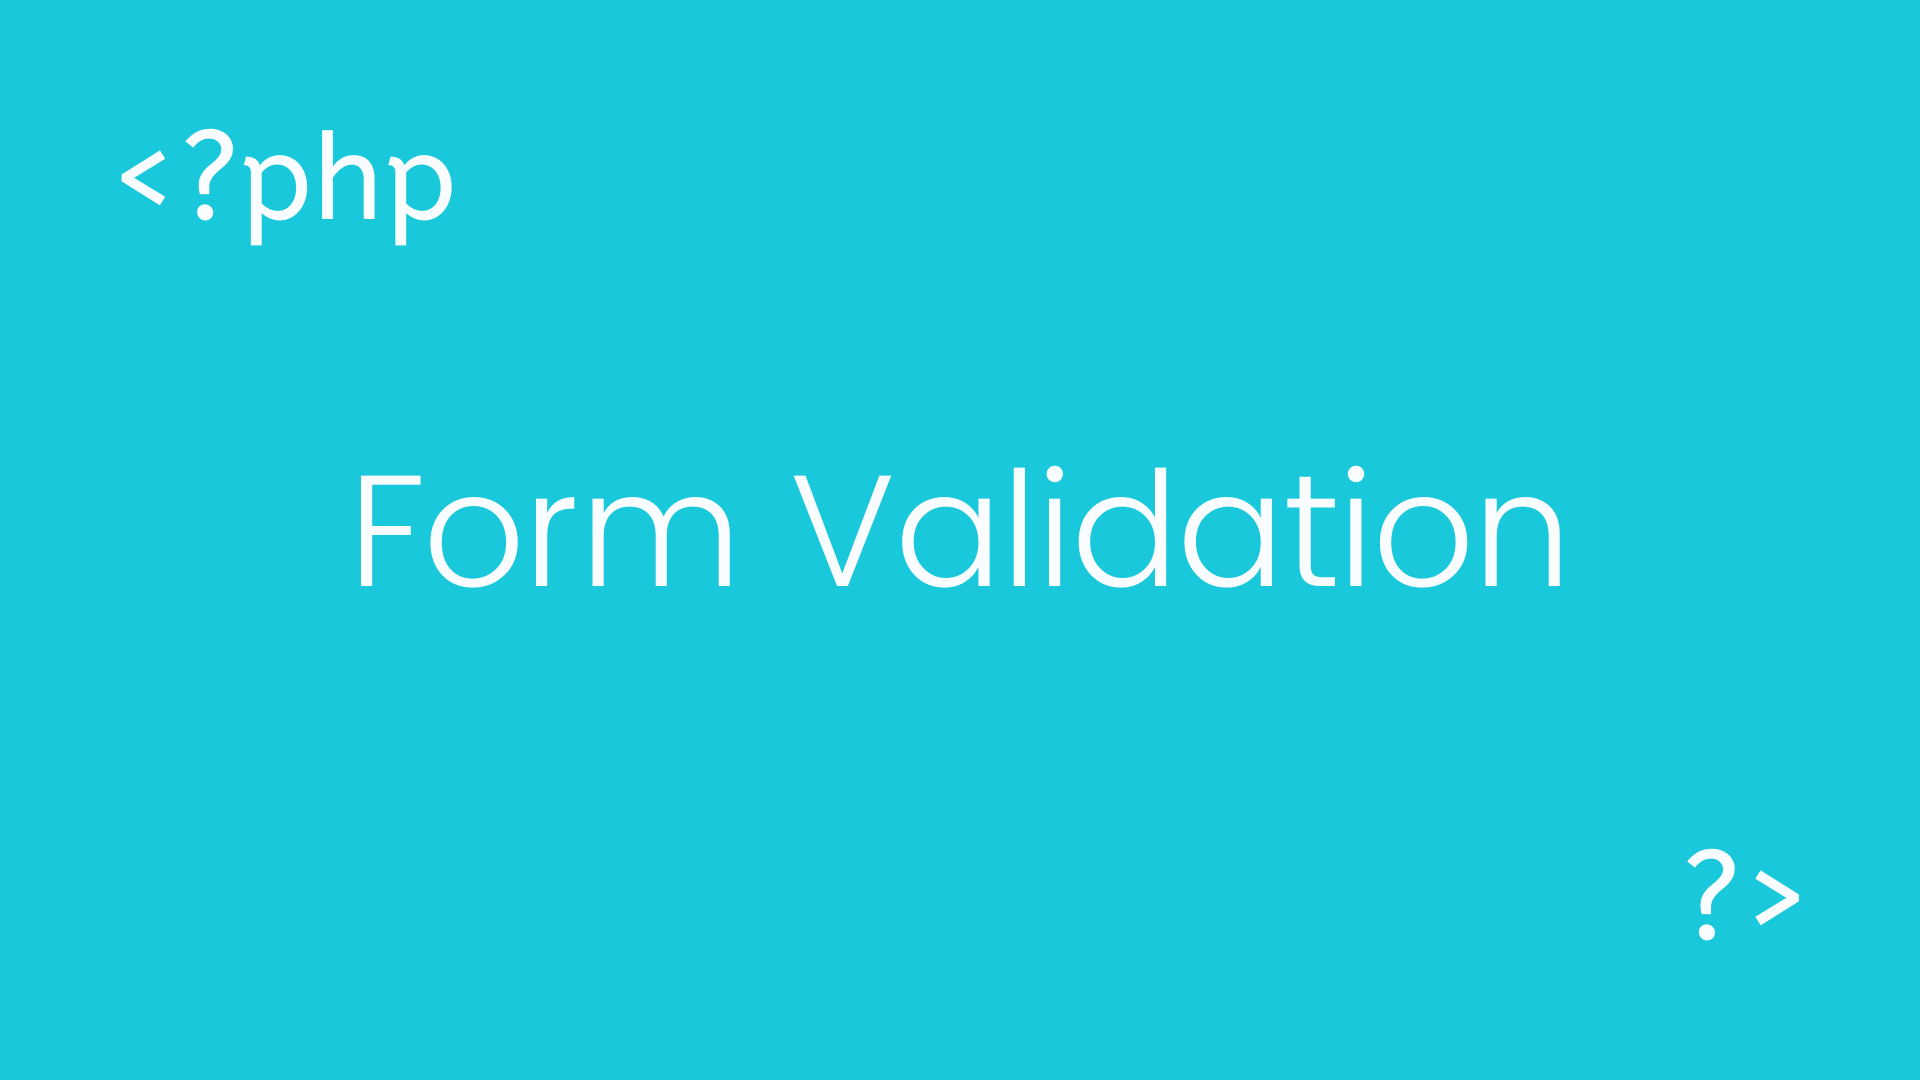 PHP Form Validation